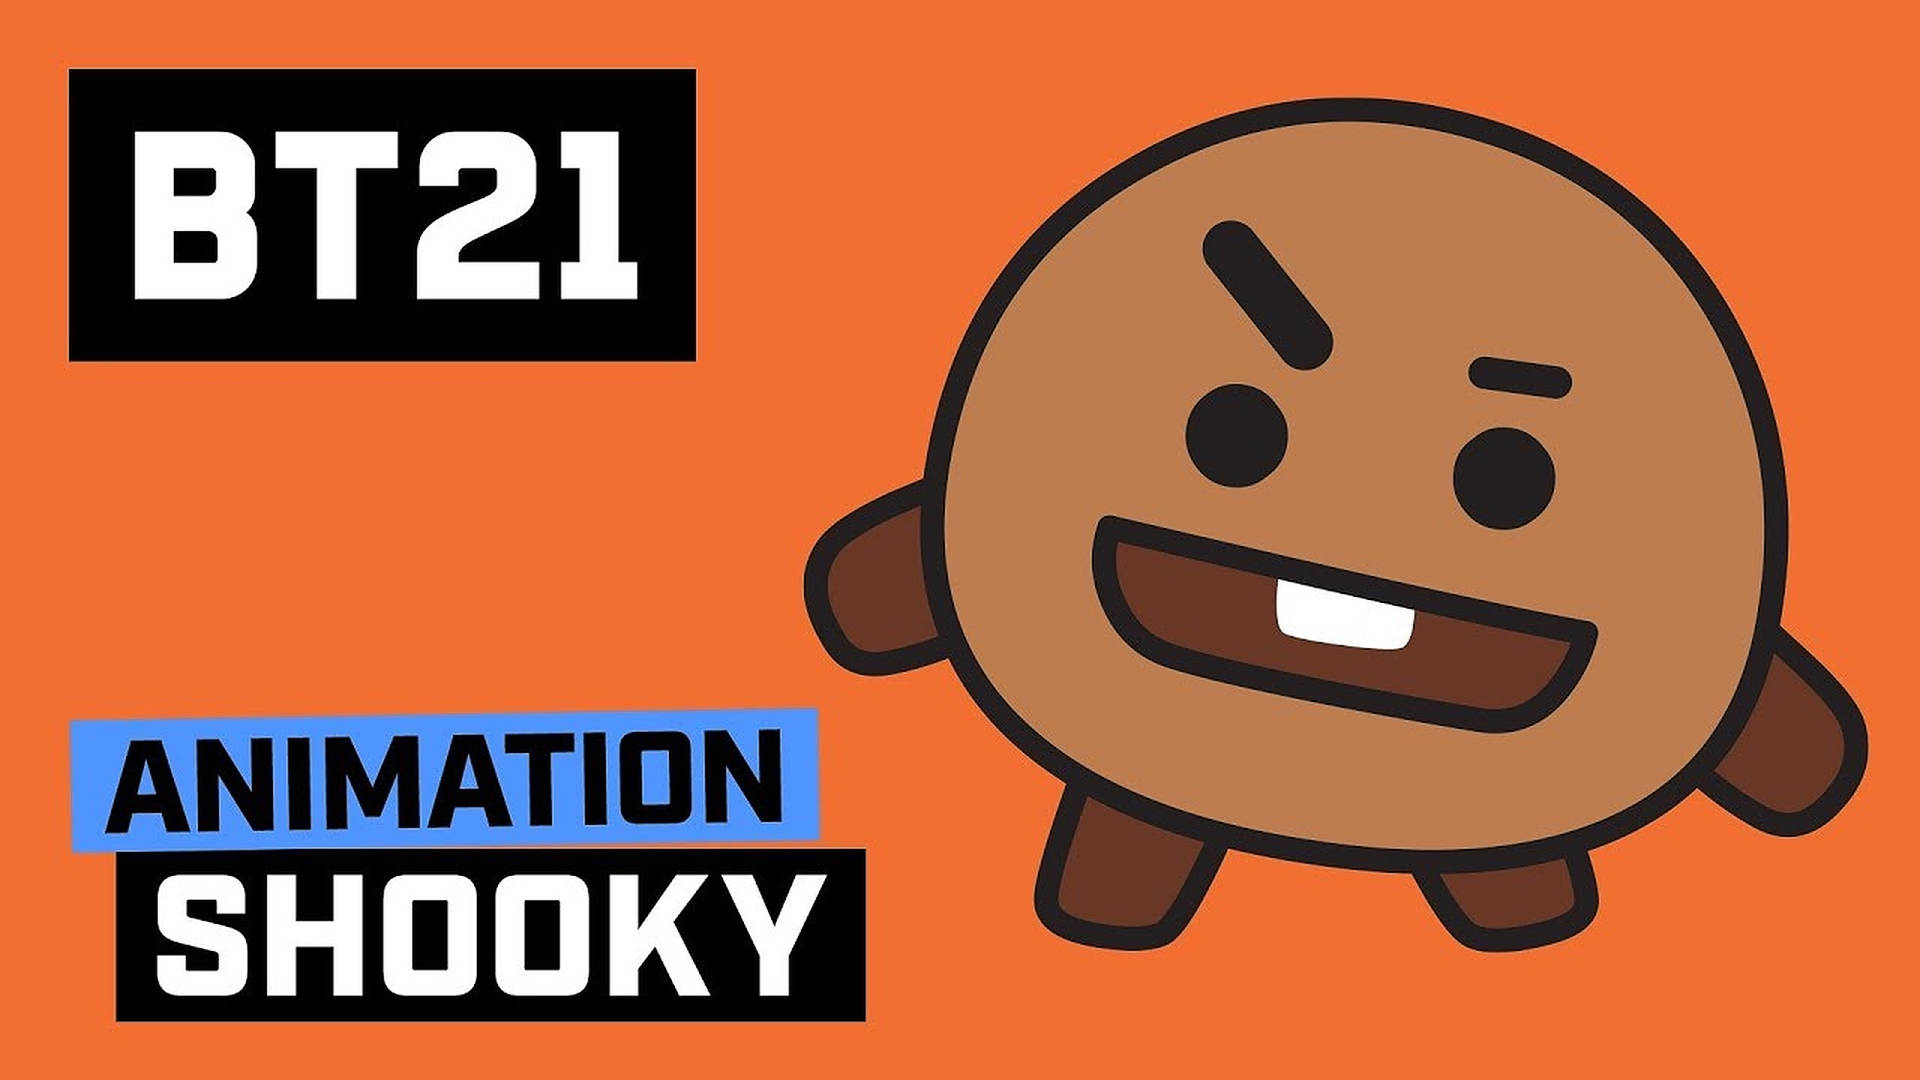 Shooky Bt21 Animation